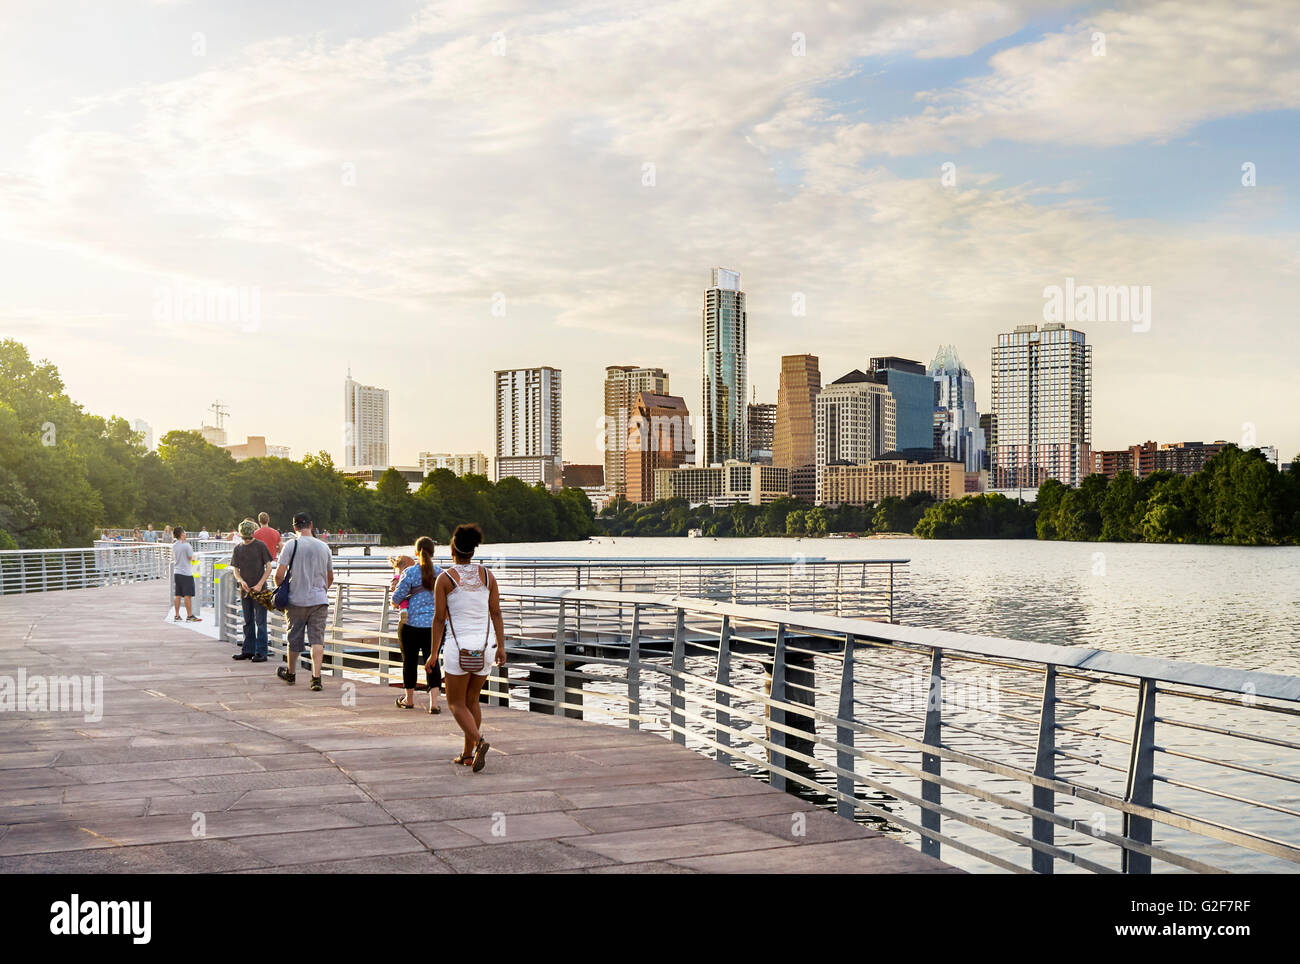 Boardwalk Along River with Skyline in Background, Austin, Texas, USA Stock Photo